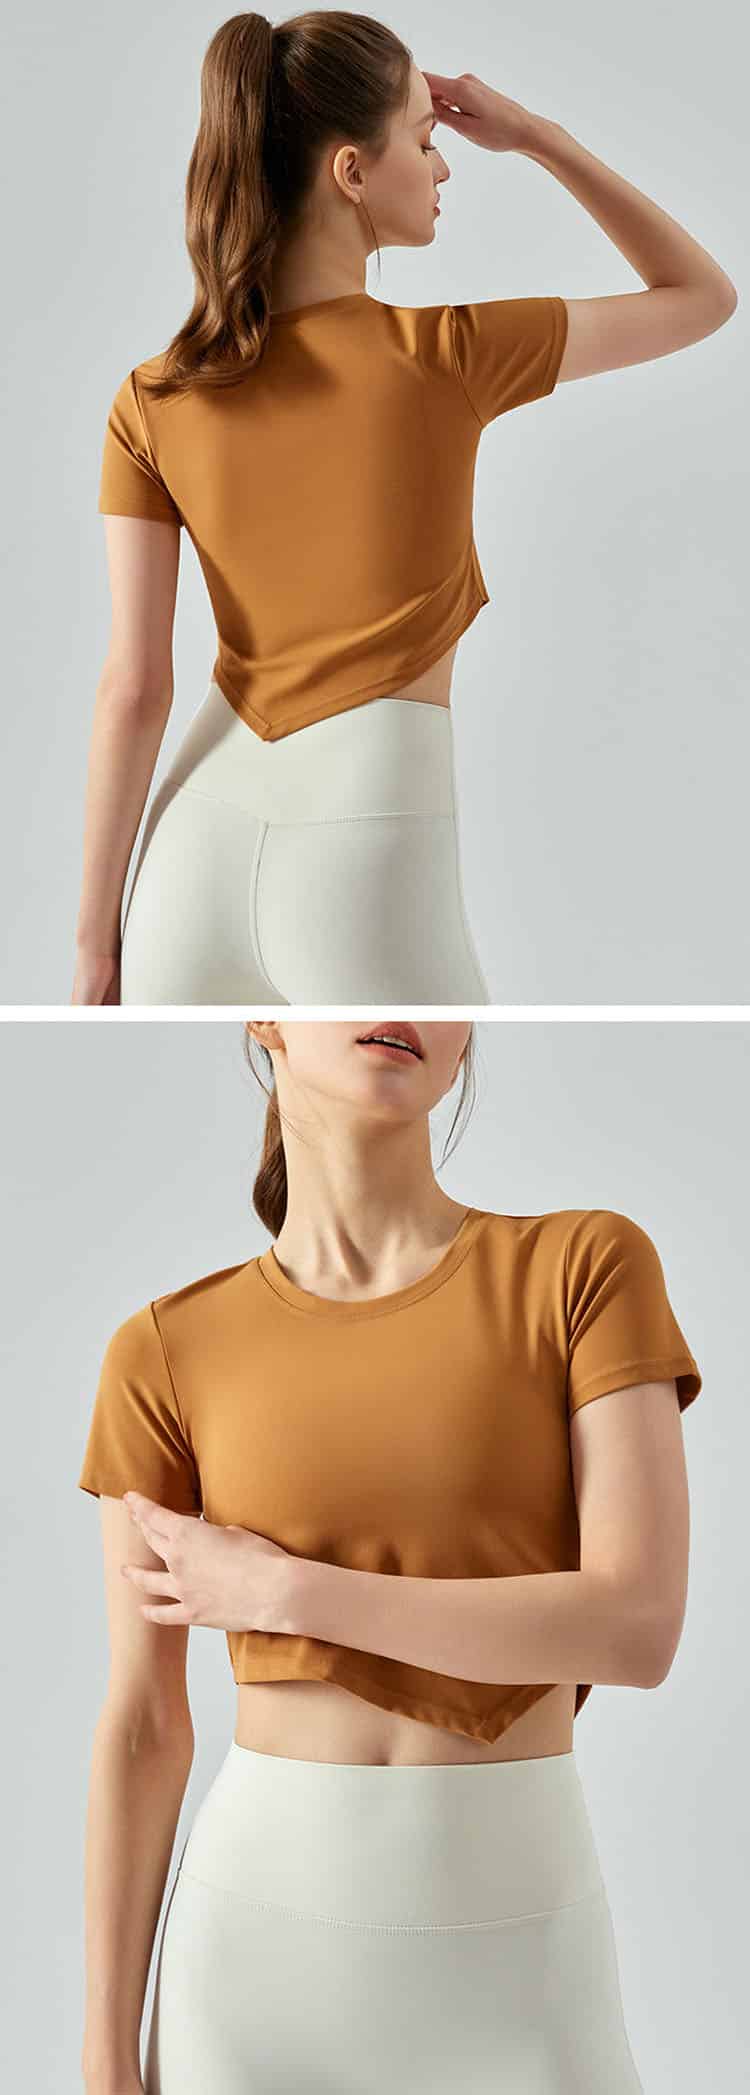 The irregular hem design highlights the waist curve and adds a sense of fashion layering